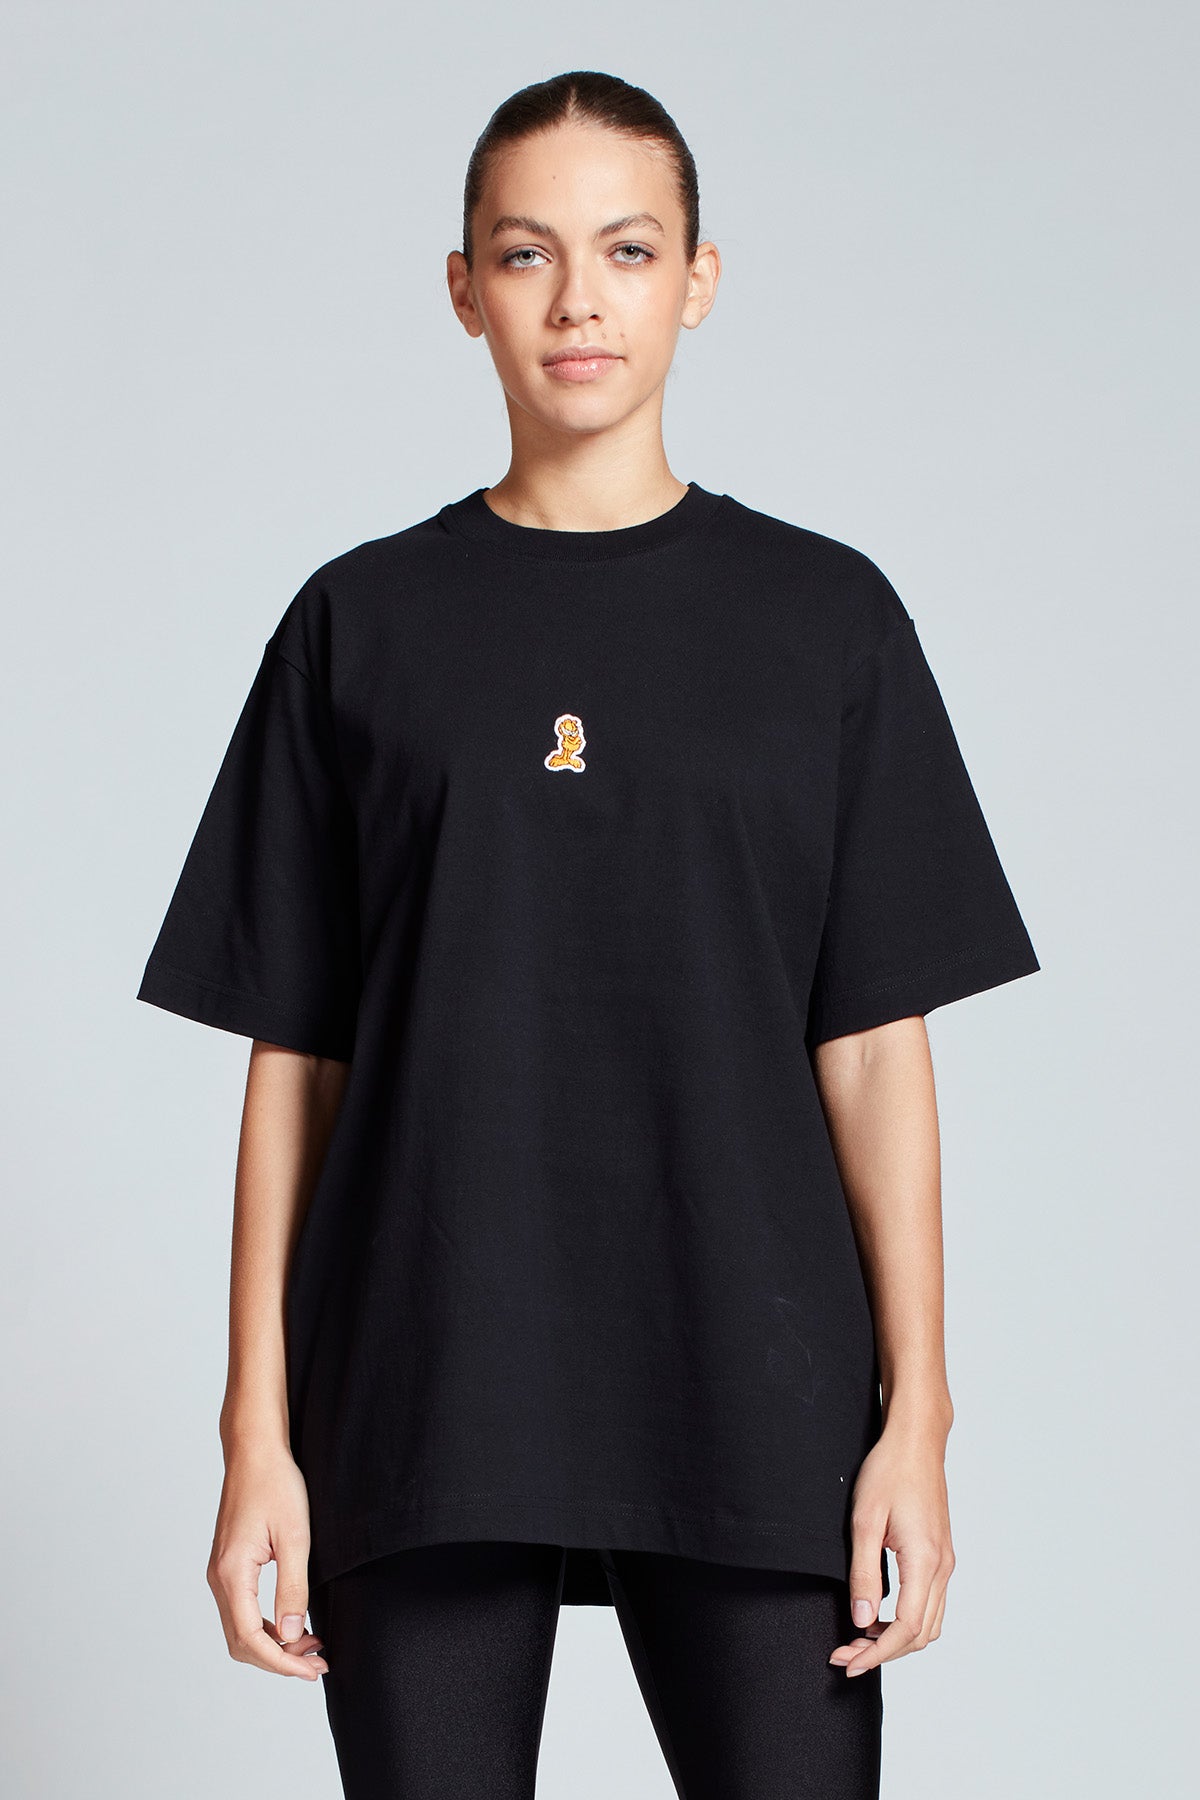 Garfield Moods T-shirt in Black